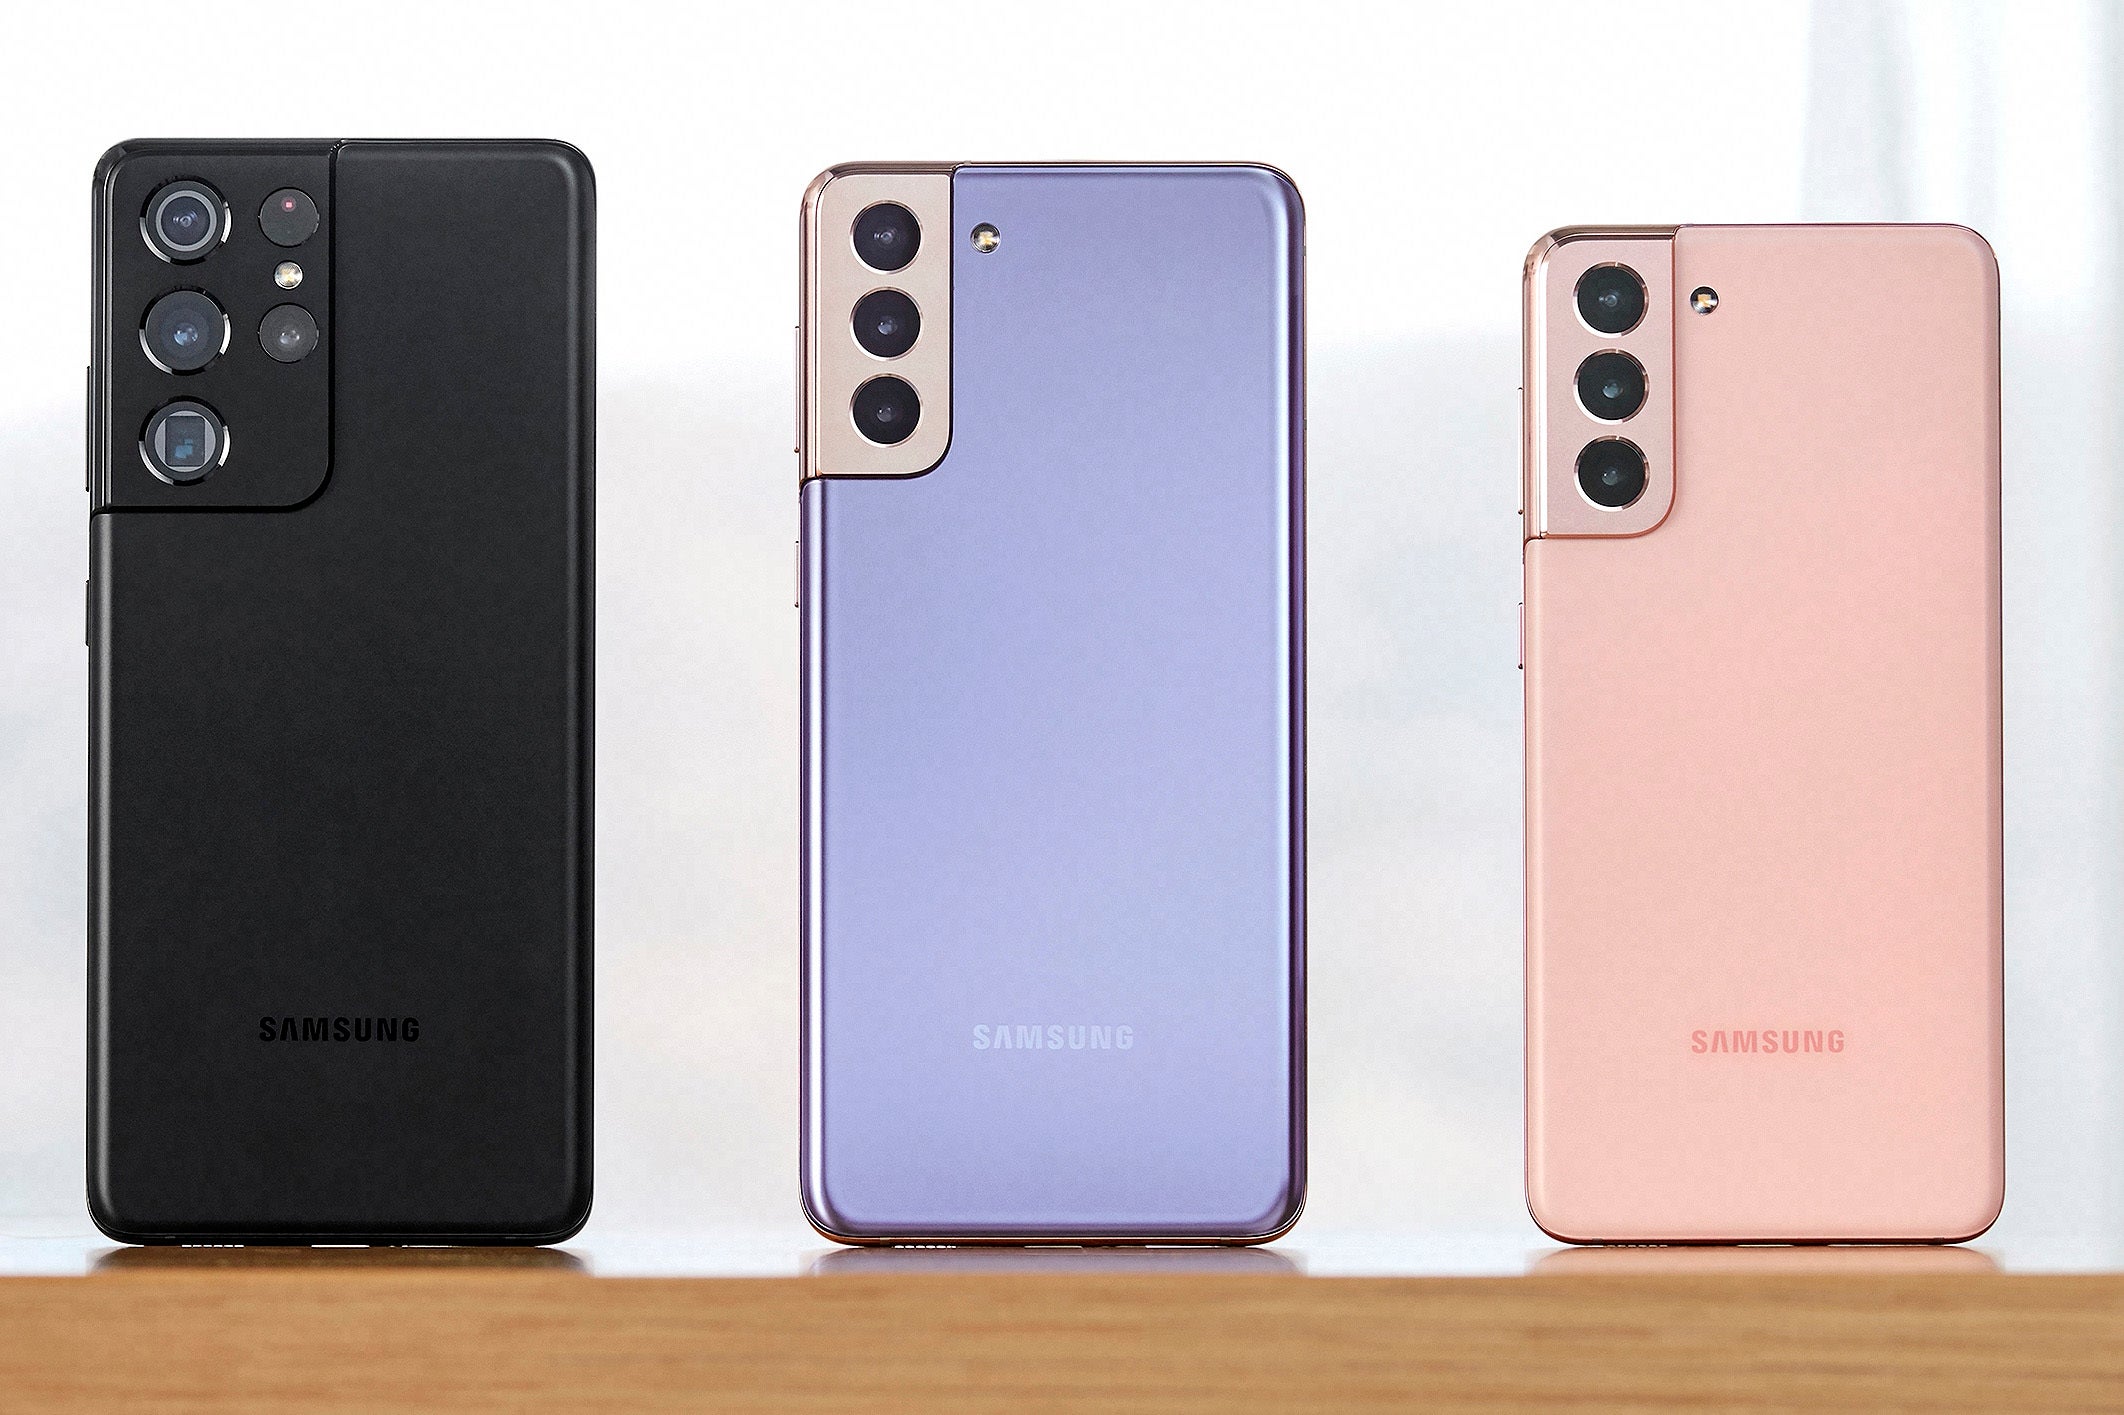 Samsung Galaxy S series evolution